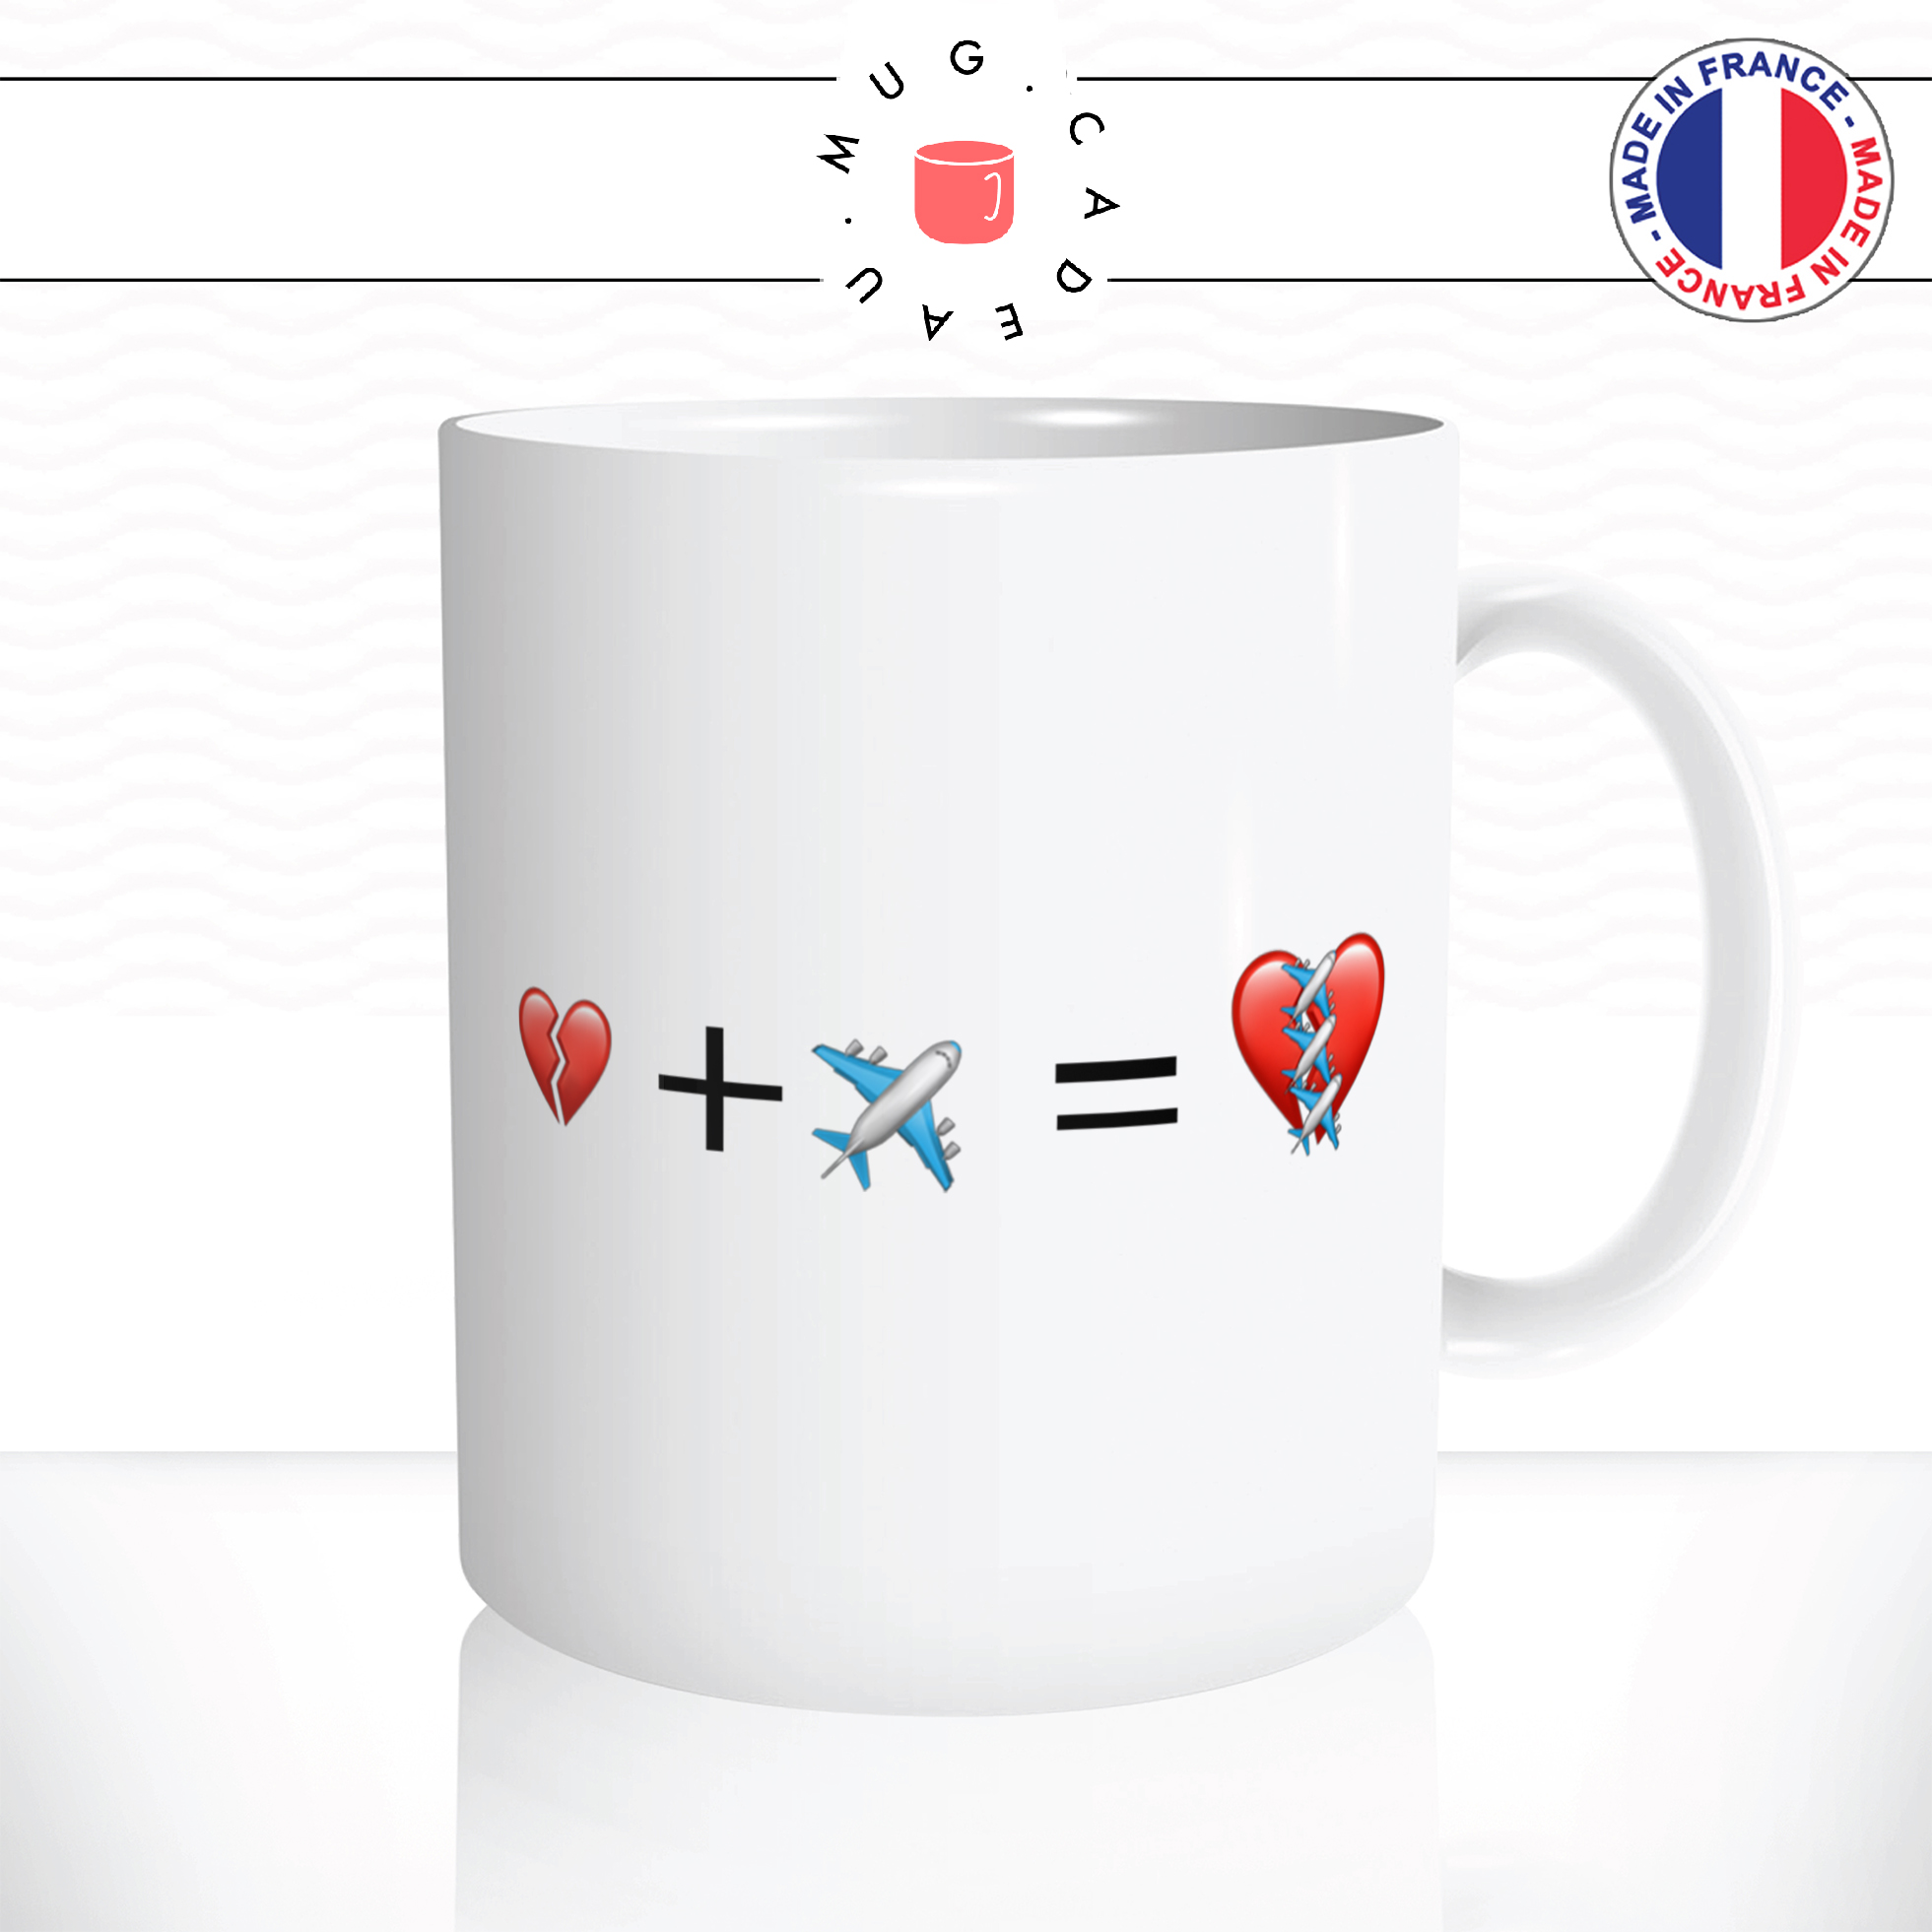 mug-tasse-ref10-voyage-emoji-coeur-brise-avion-pansement-cafe-the-mugs-tasses-personnalise-anse-droite